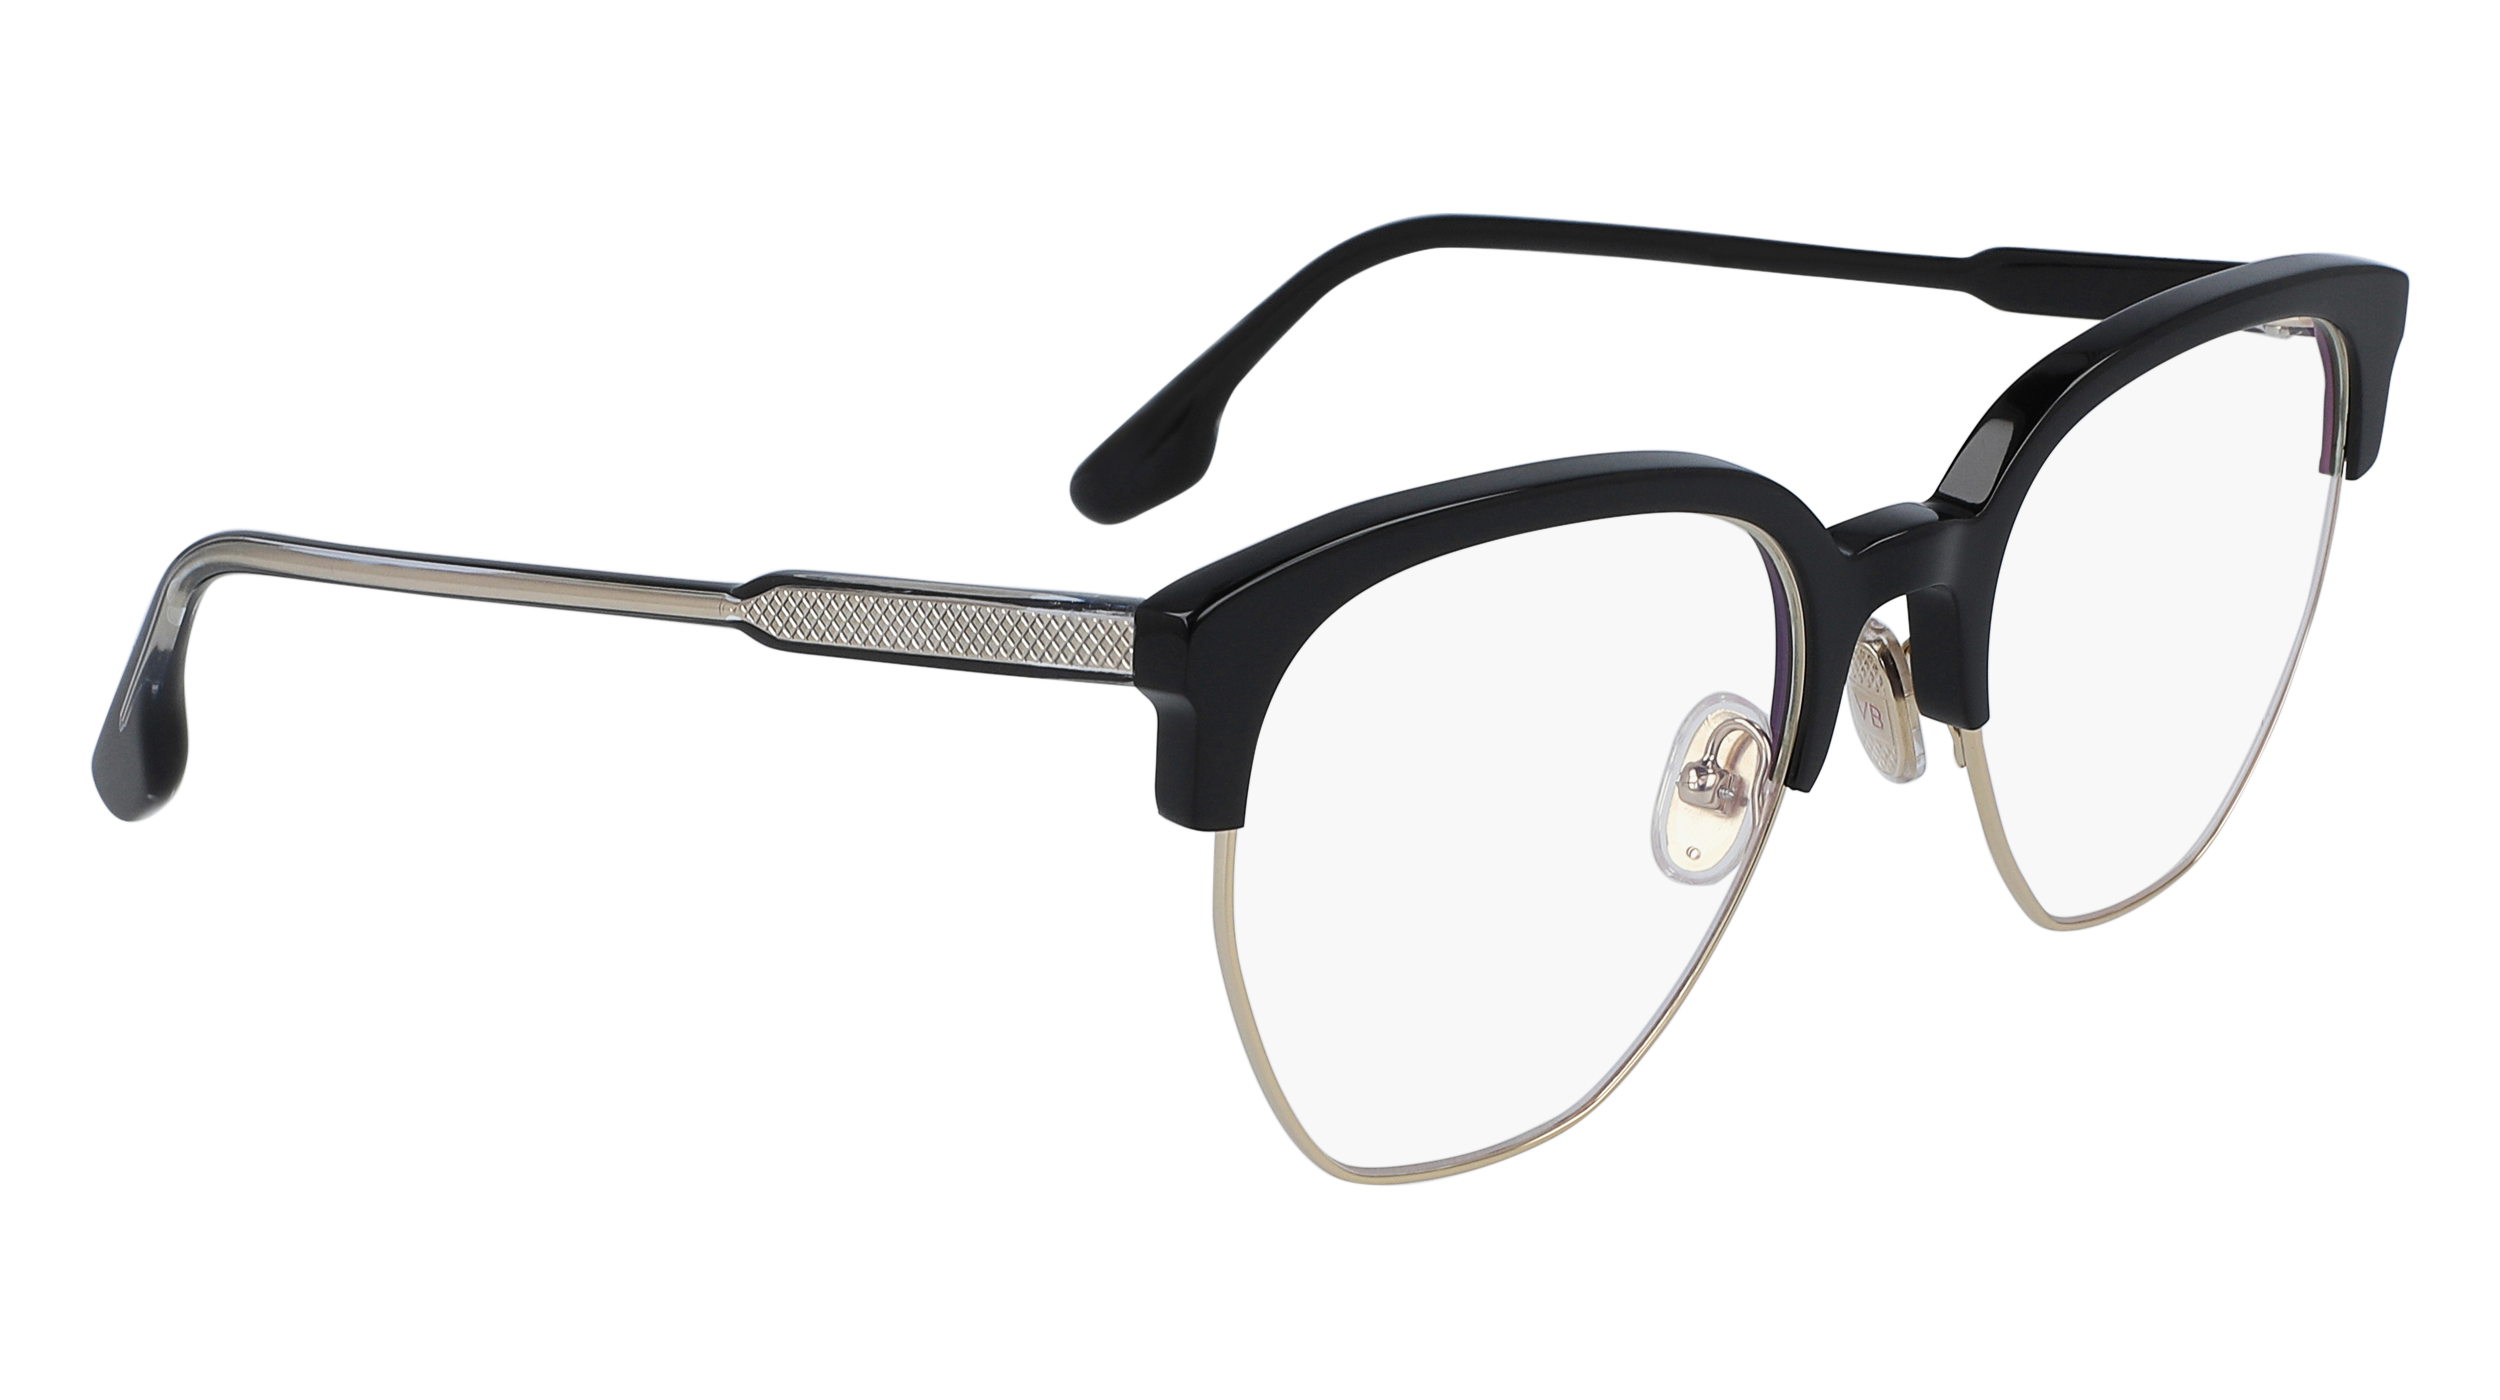 Glasses Victoria-beckham Vb2107, black colour - Doyle